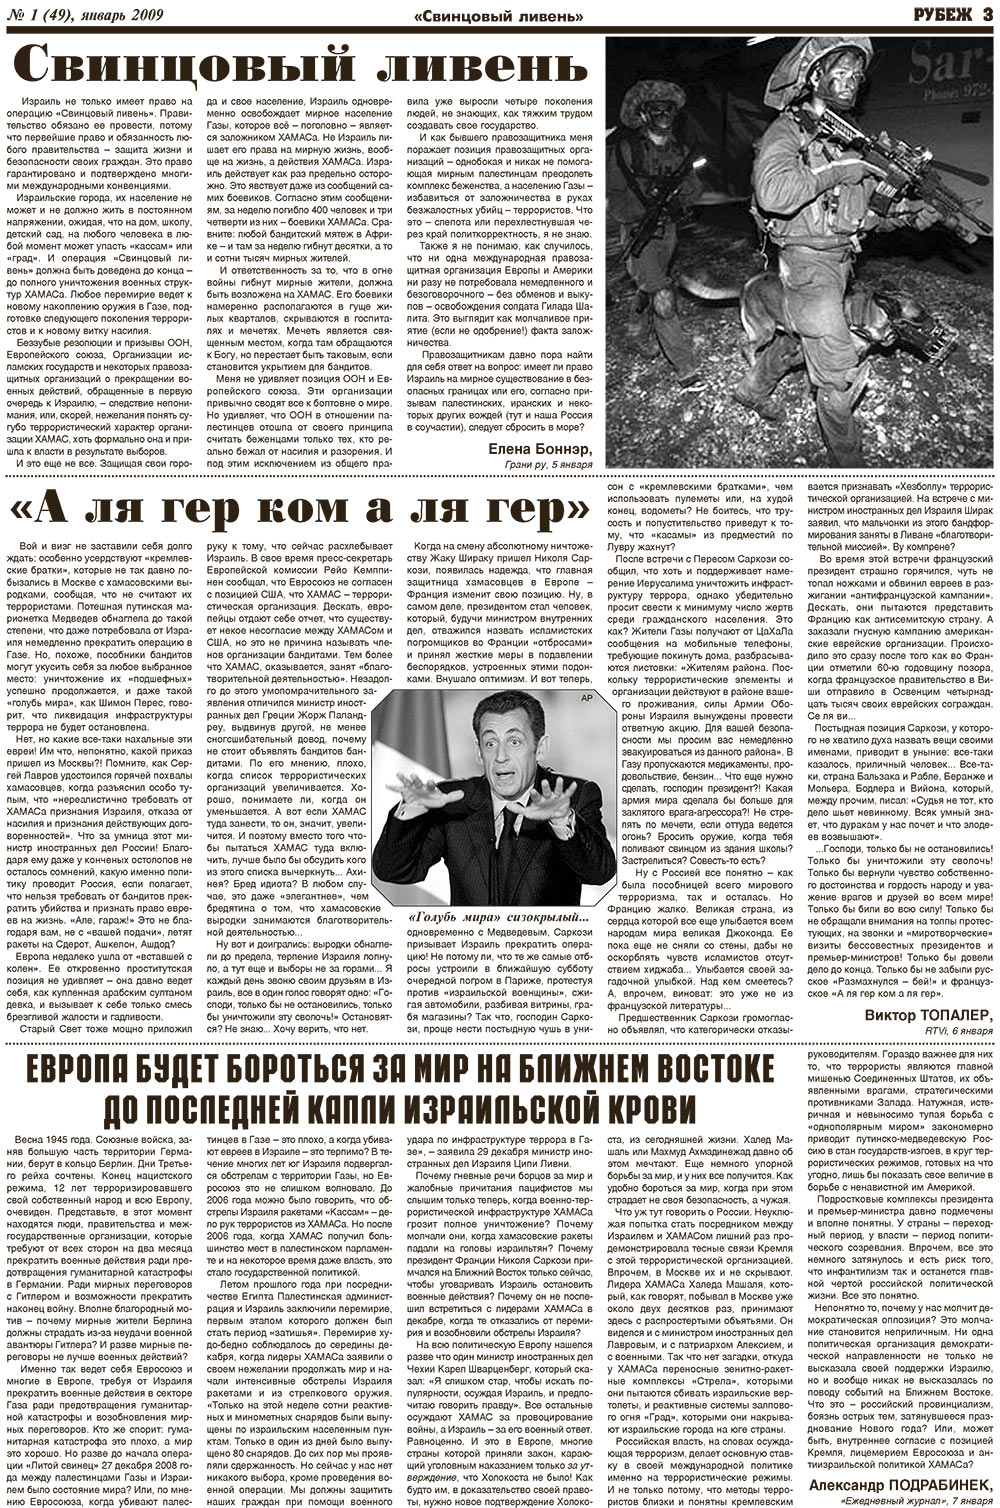 Рубеж, газета. 2009 №1 стр.3